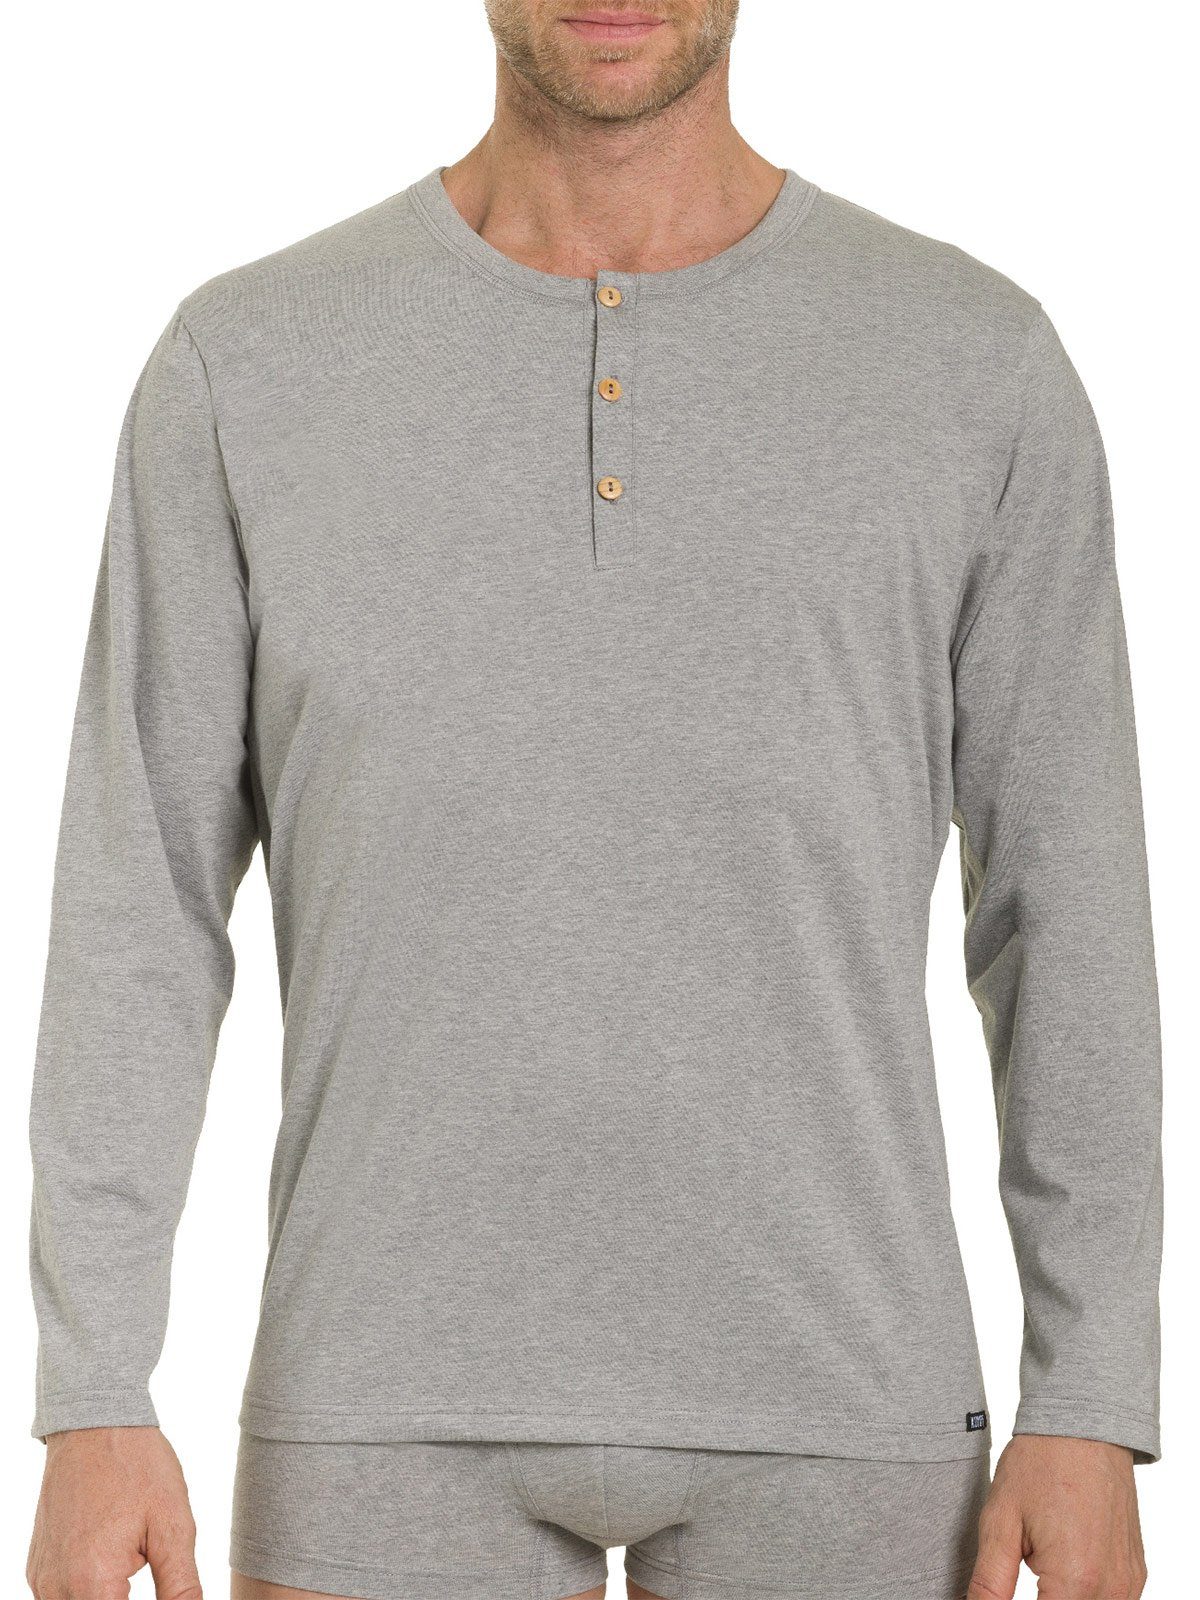 KUMPF Unterhemd Herren langarm Shirt Bio Cotton (Stück, 1-St) hohe Markenqualität stahlgrau-melange